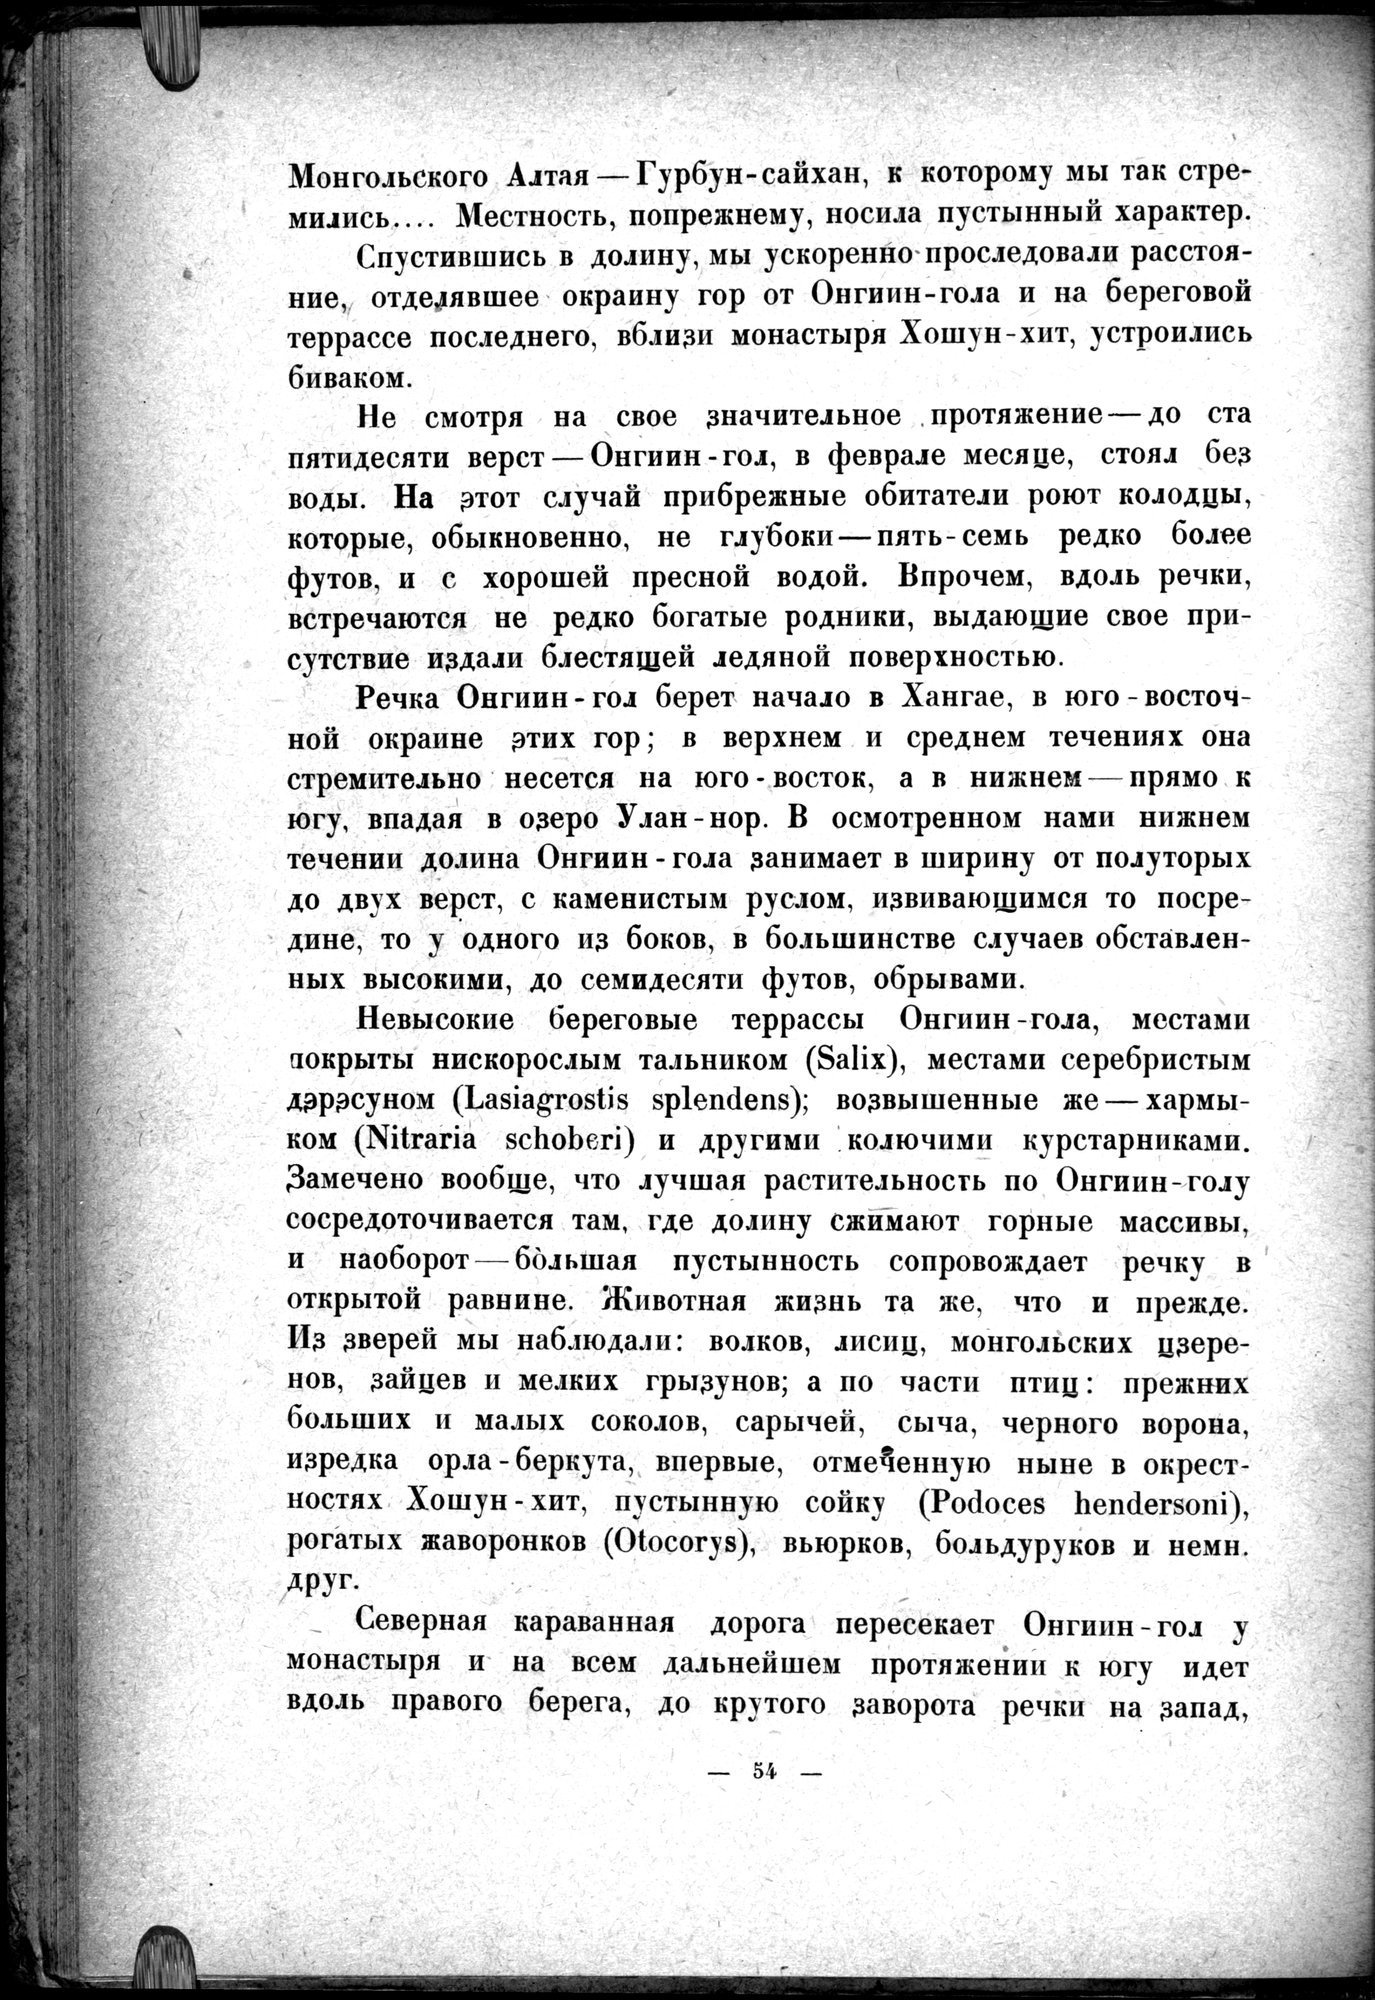 Mongoliya i Amdo i mertby gorod Khara-Khoto : vol.1 / Page 78 (Grayscale High Resolution Image)